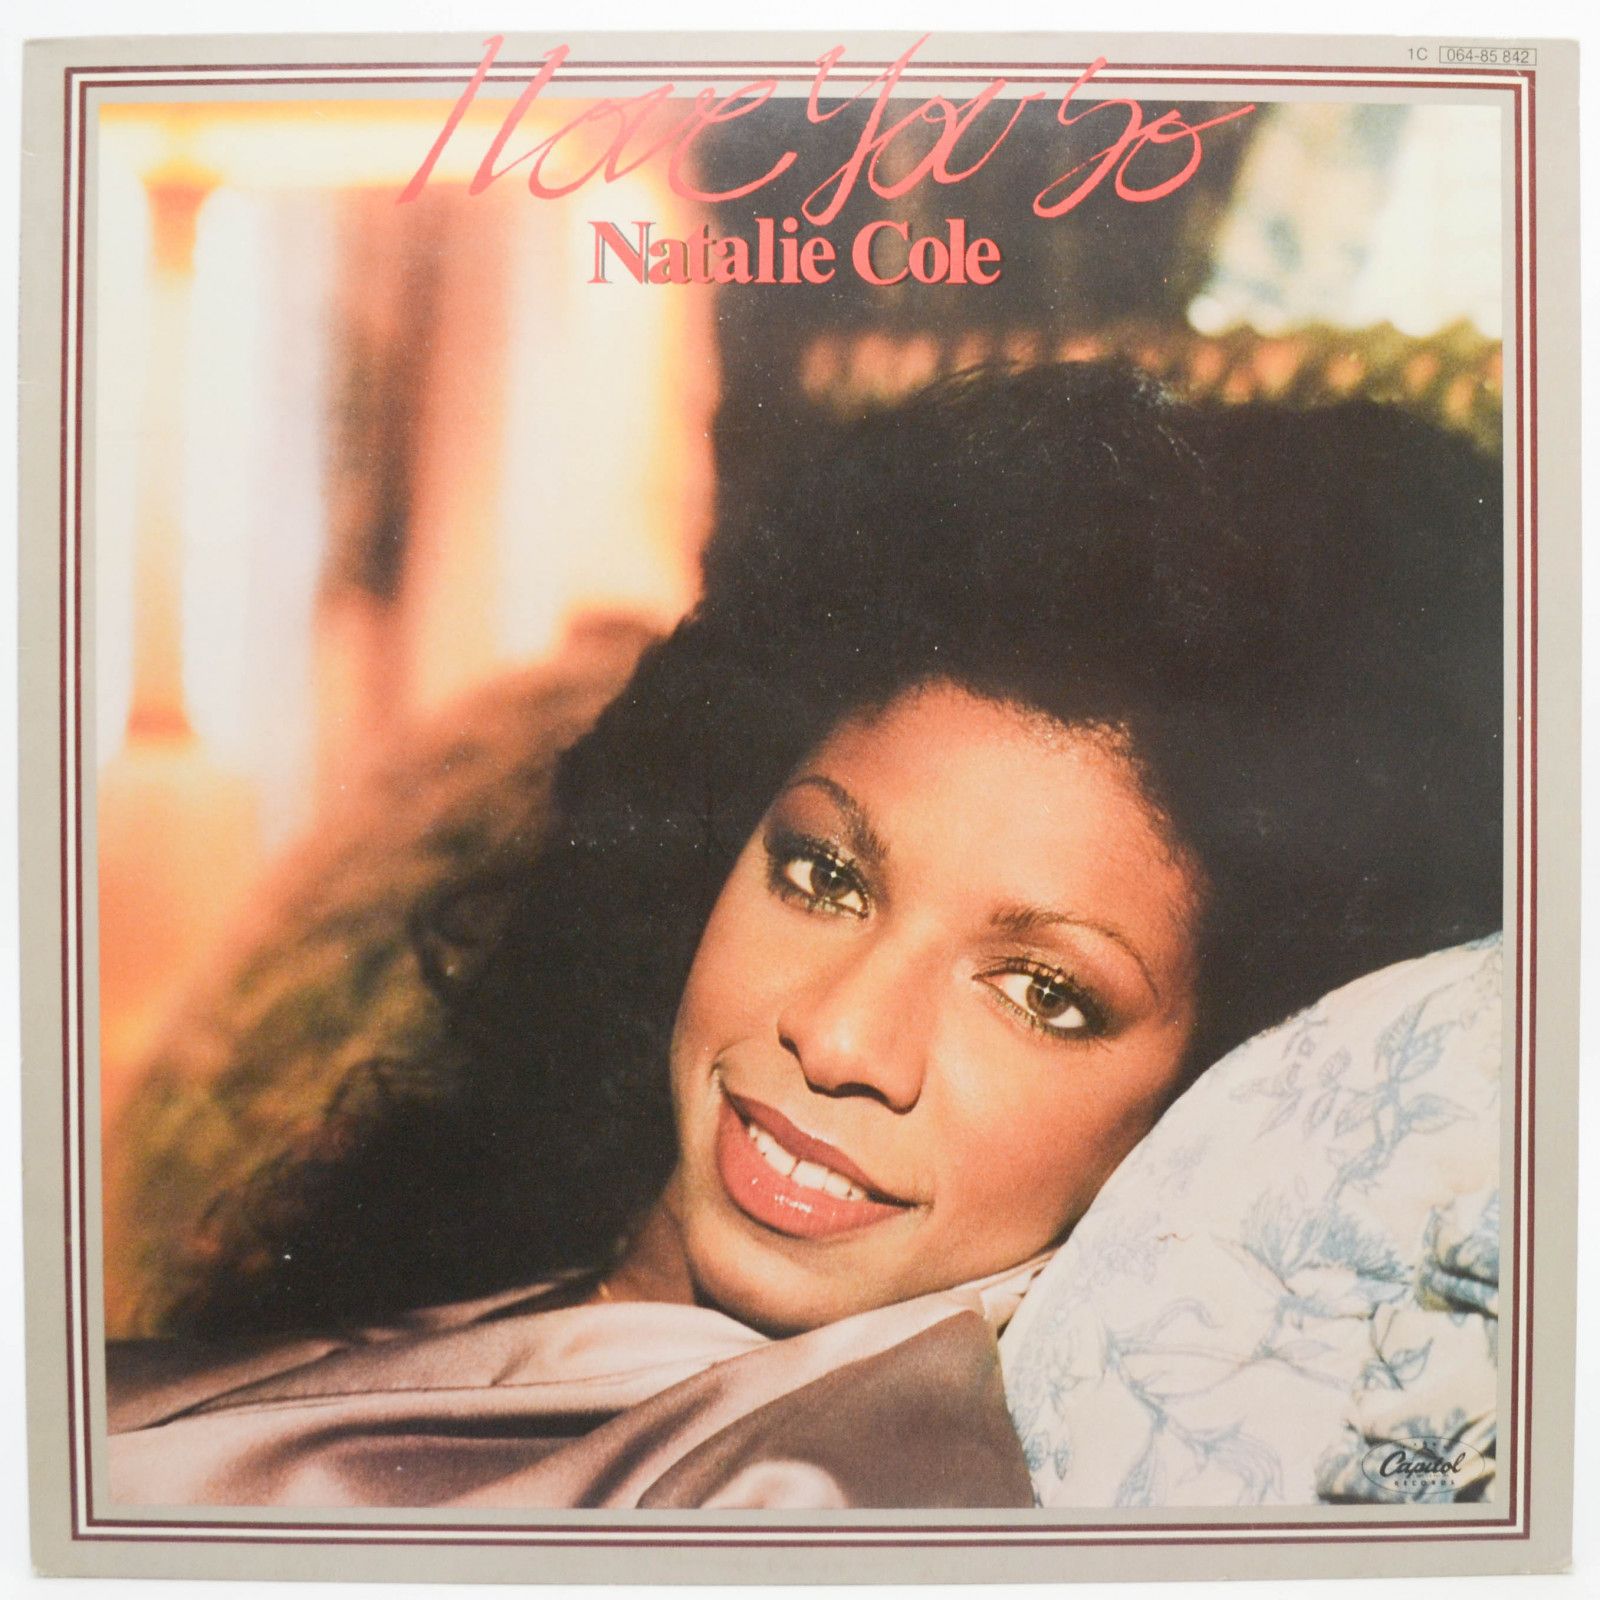 Natalie Cole — I Love You So, 1979